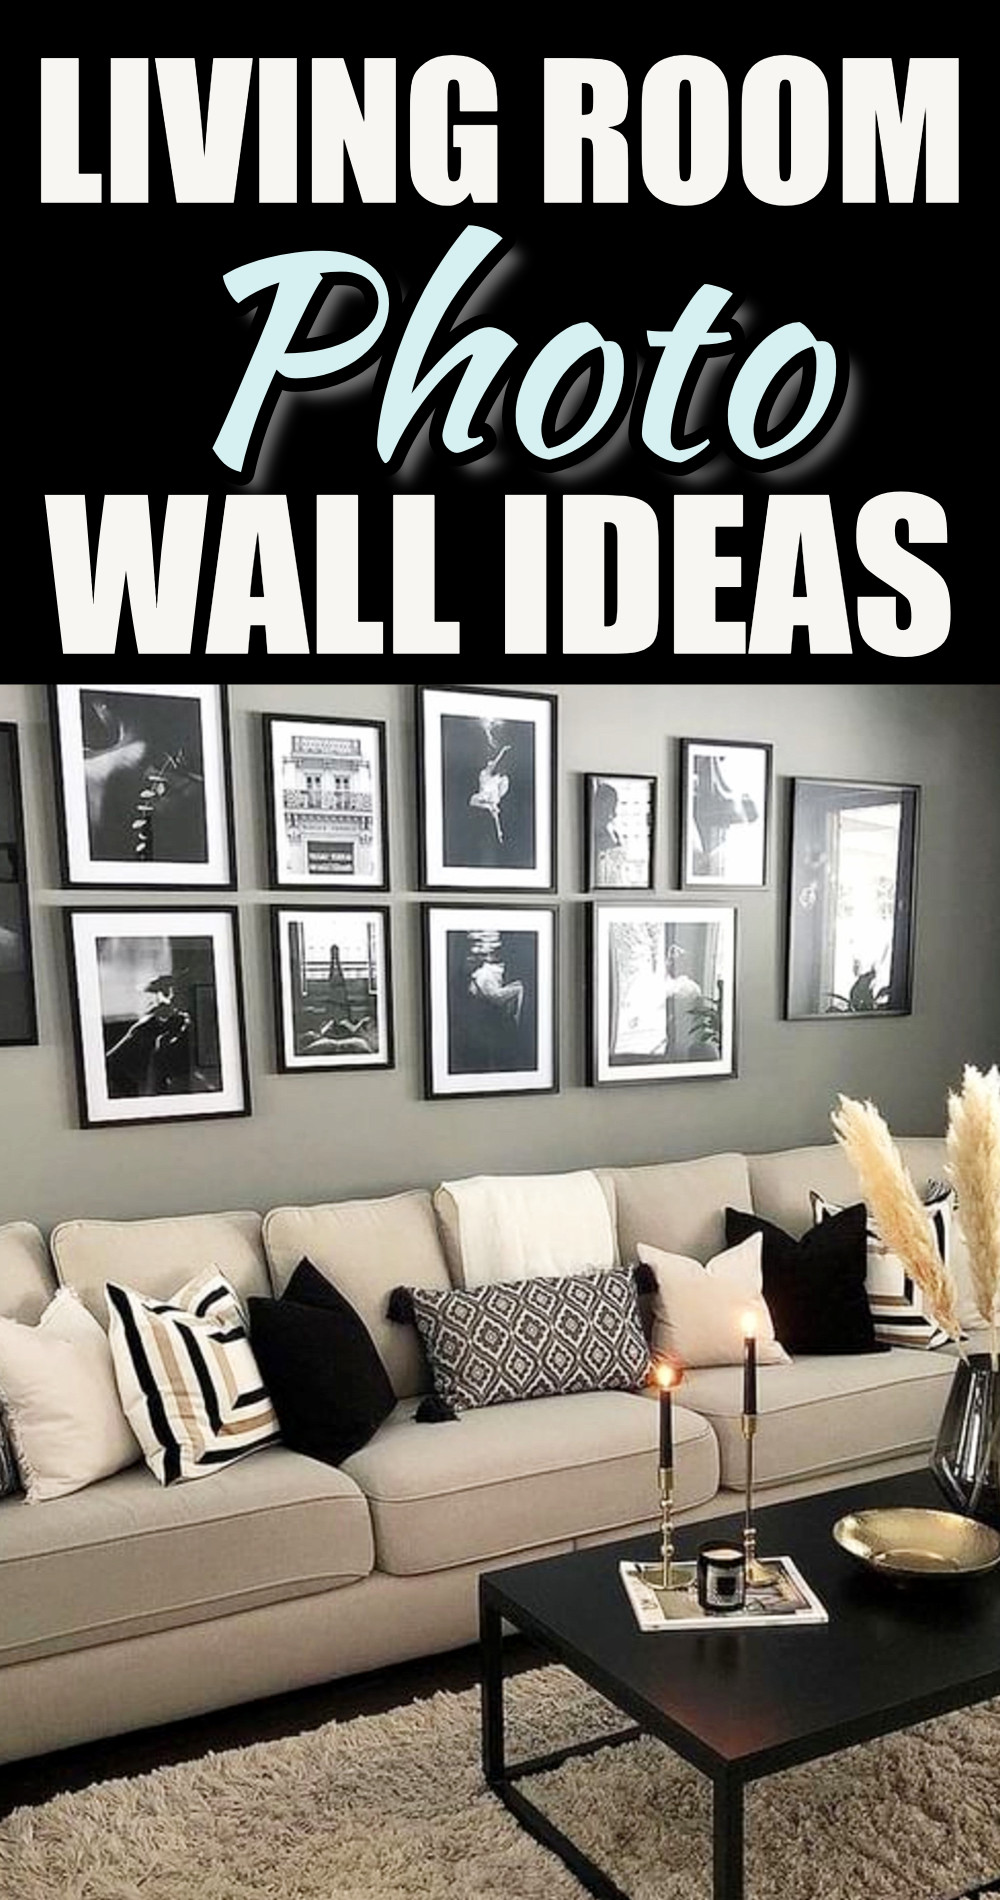 Living Room Photo Wall Ideas